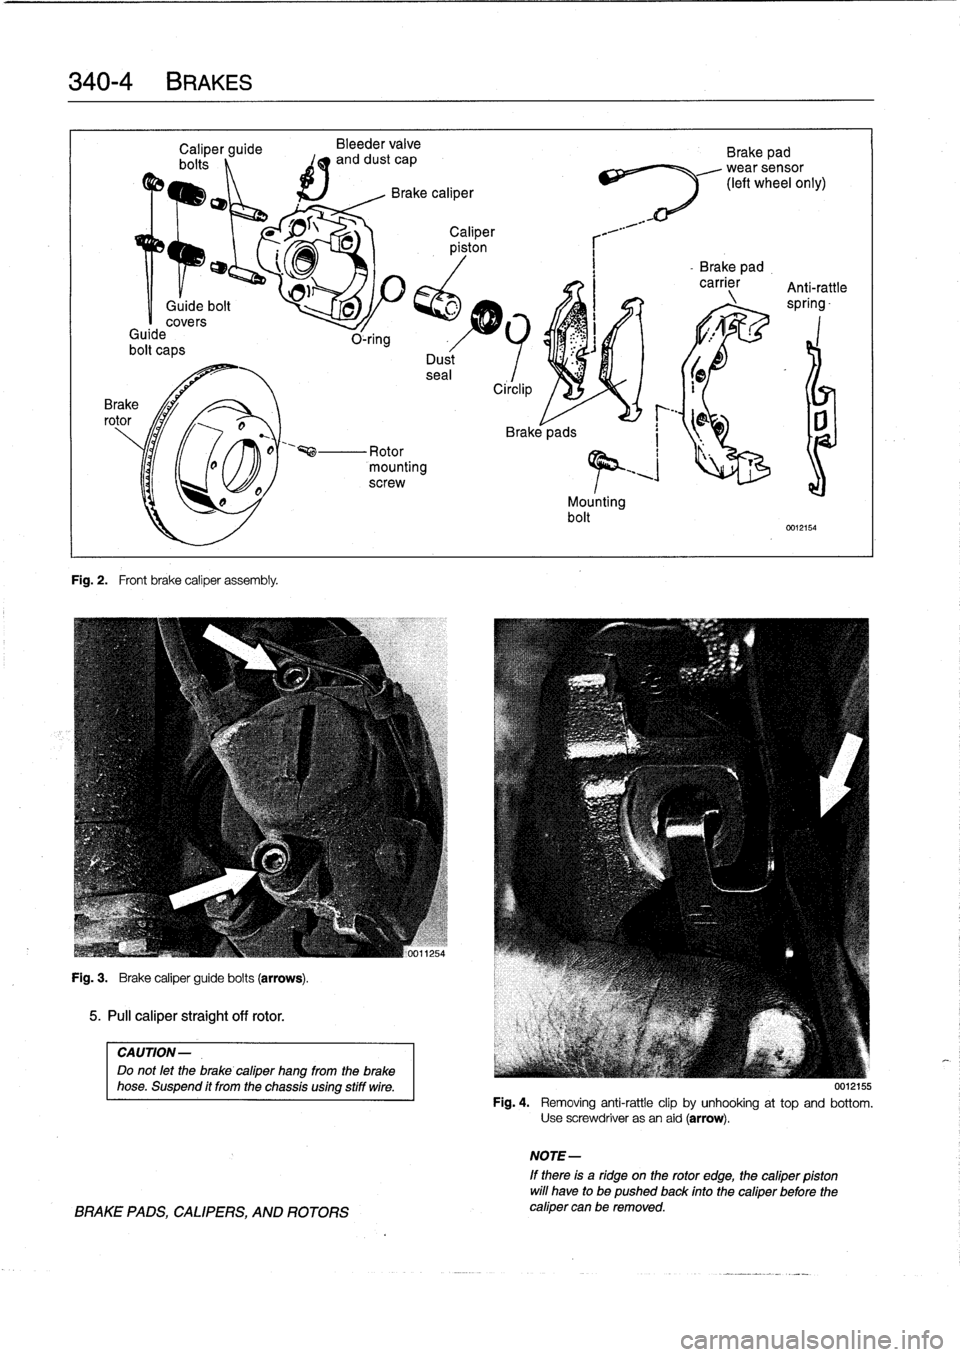 BMW 328i 1994 E36 Workshop Manual 
340-
4
BRAKES

Fig
.
2
.

	

Front
brake
caliper
assembly
.

Bleeder
valve
and
dust
cap

Mounting
bolt

Brake
pad
wearsensor
(left
wheel
only)

-
Brake
pad
.
carrier
Anti-rattle
^_
spring-

0012154

